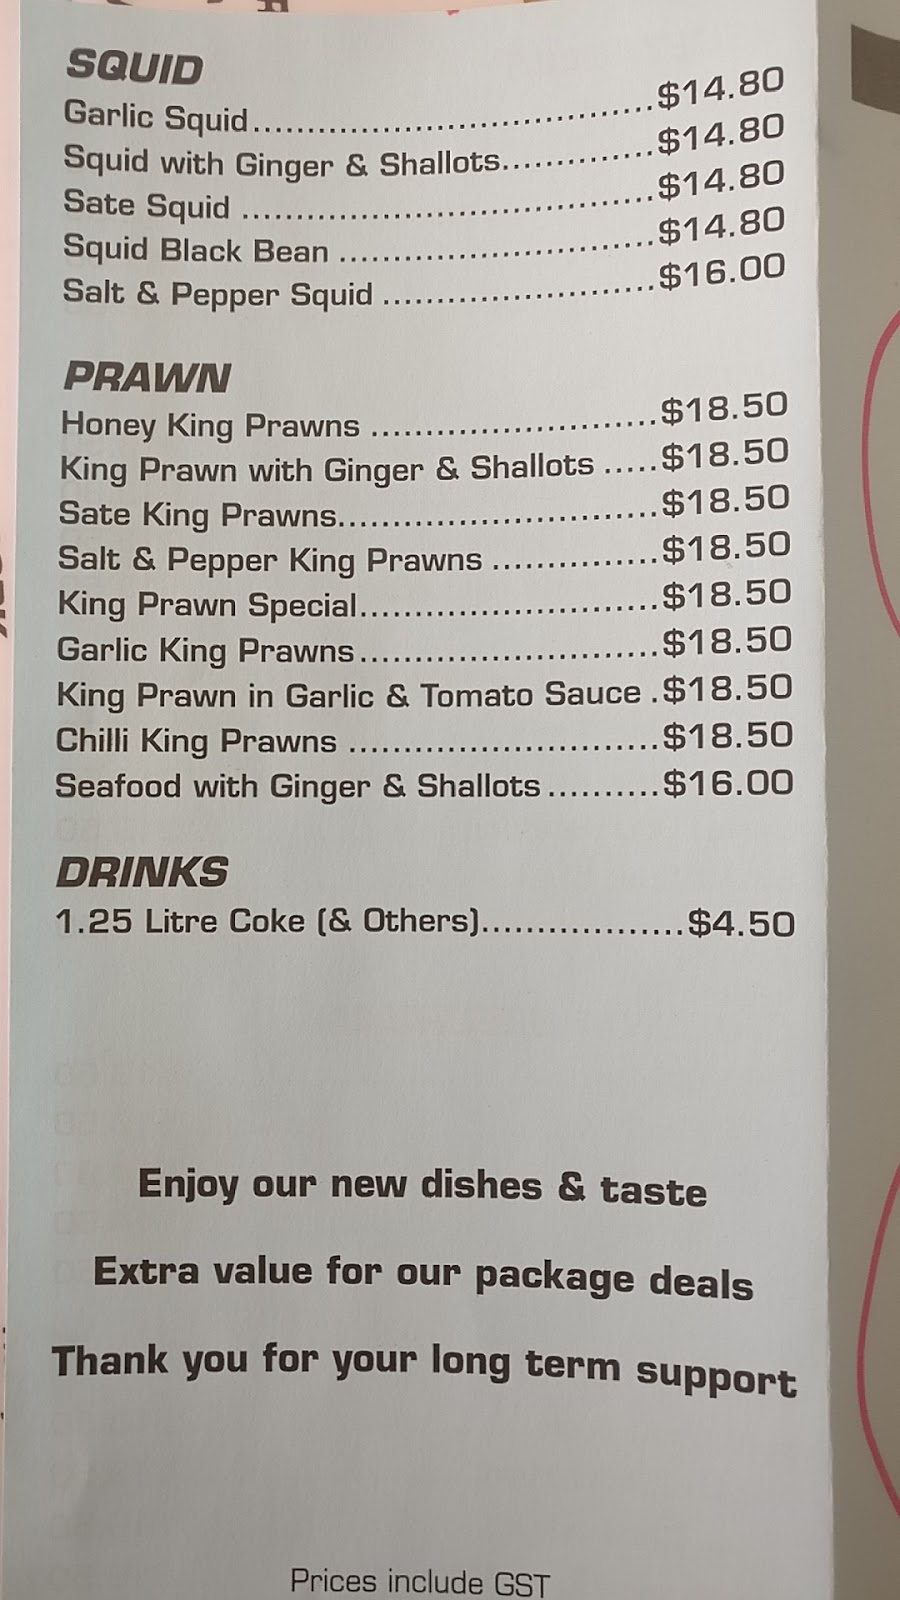 Putra Chinese Take-Away Foods | 52 Orchardtown Rd, New Lambton NSW 2305, Australia | Phone: (02) 4956 1077